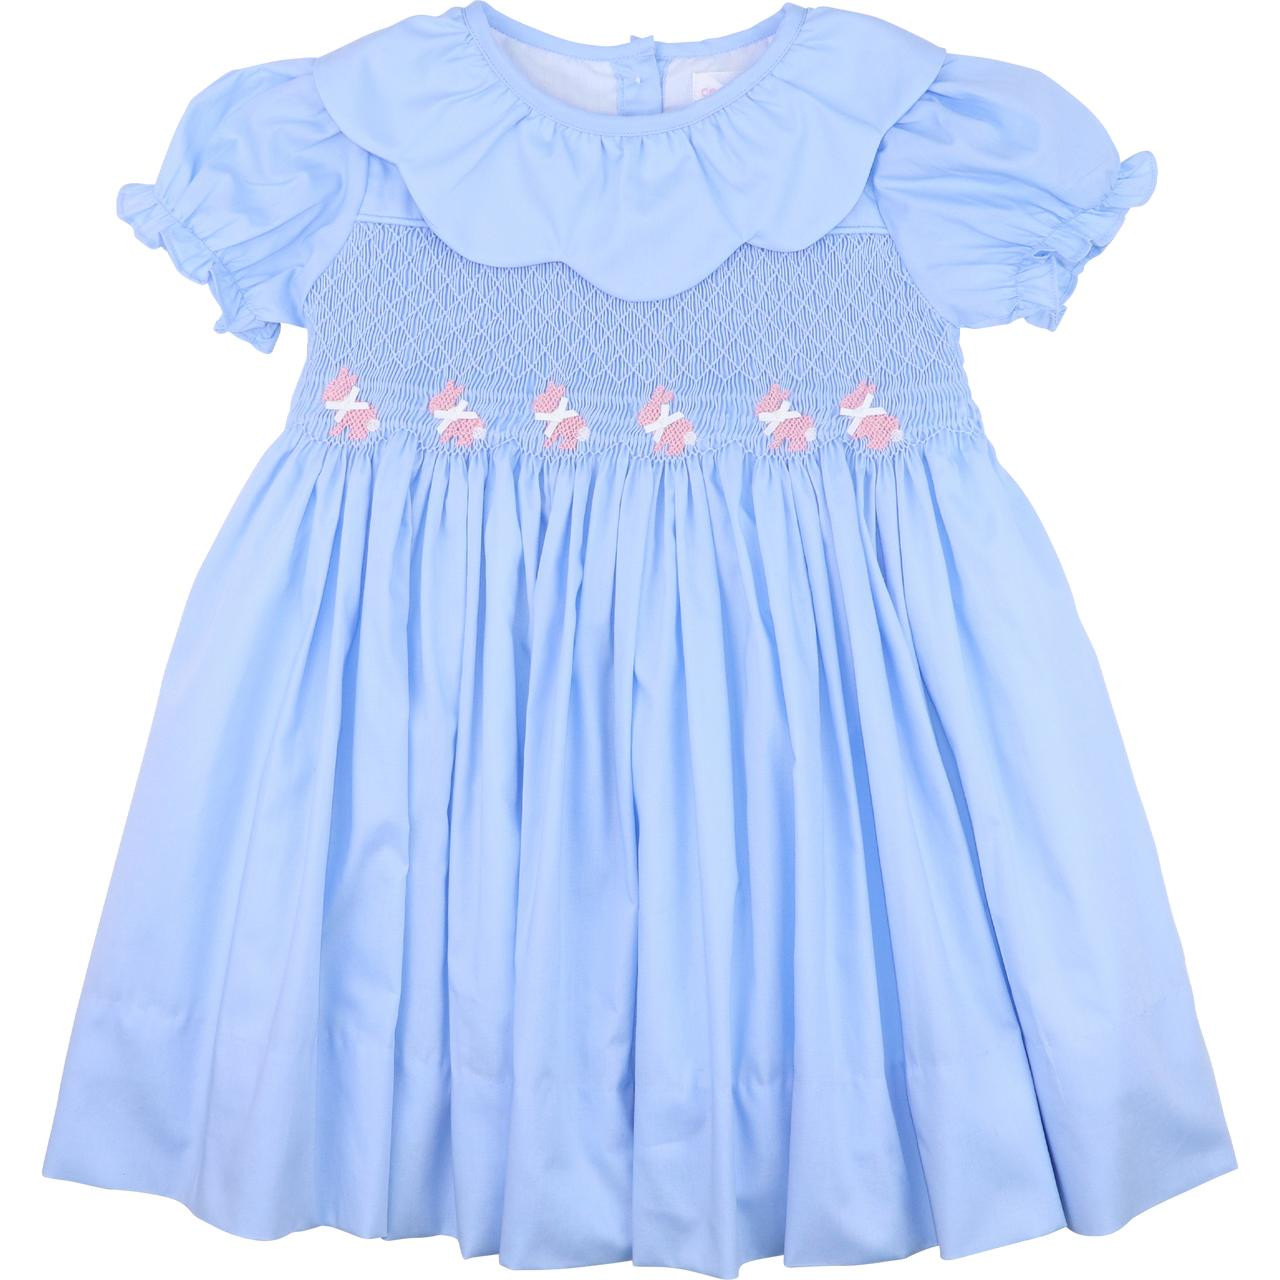 Smocked Dresses for Girls, Toddler Easter Dress, Smocked Dress